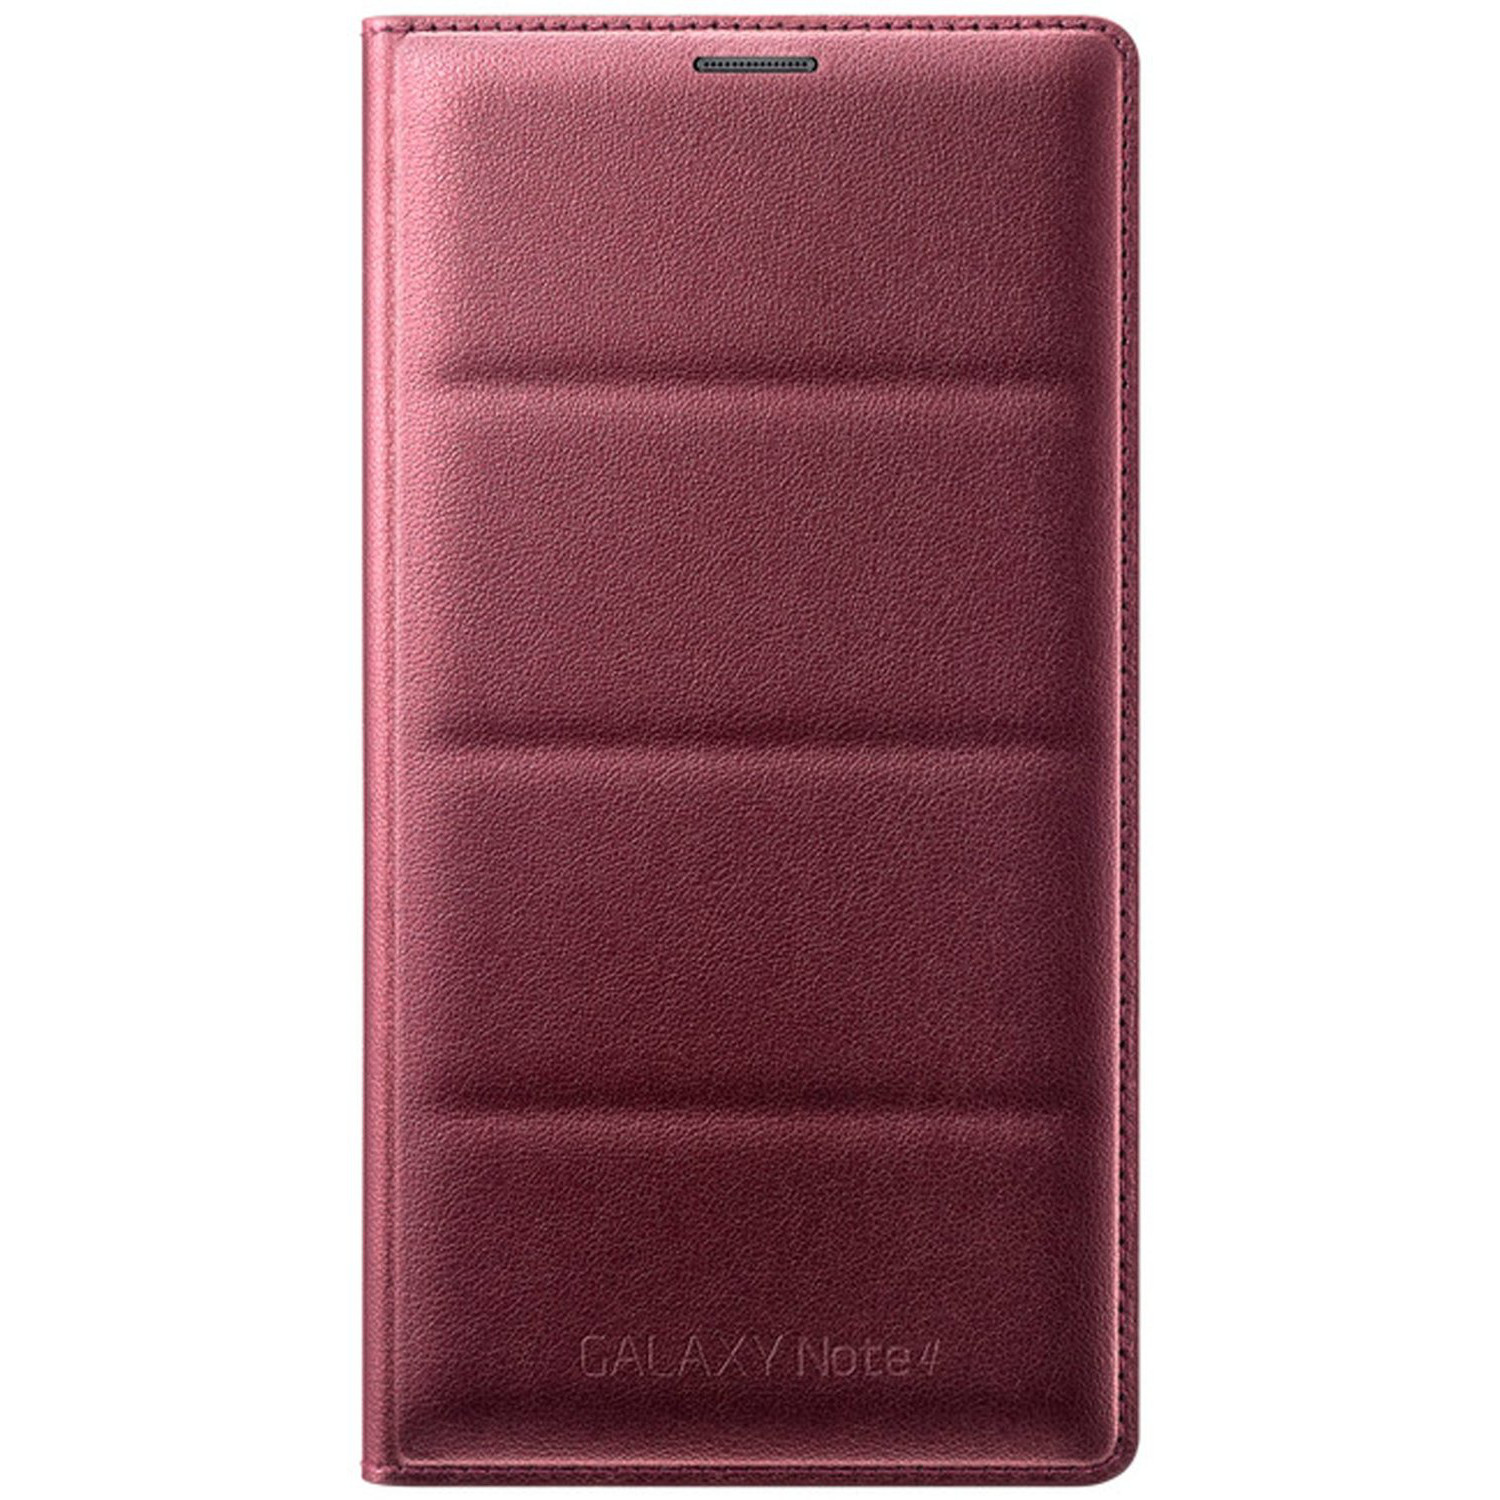  Husa Flip Wallet Samsung EF-WN910BREGWW pentru Galaxy Note 4, Visiniu 